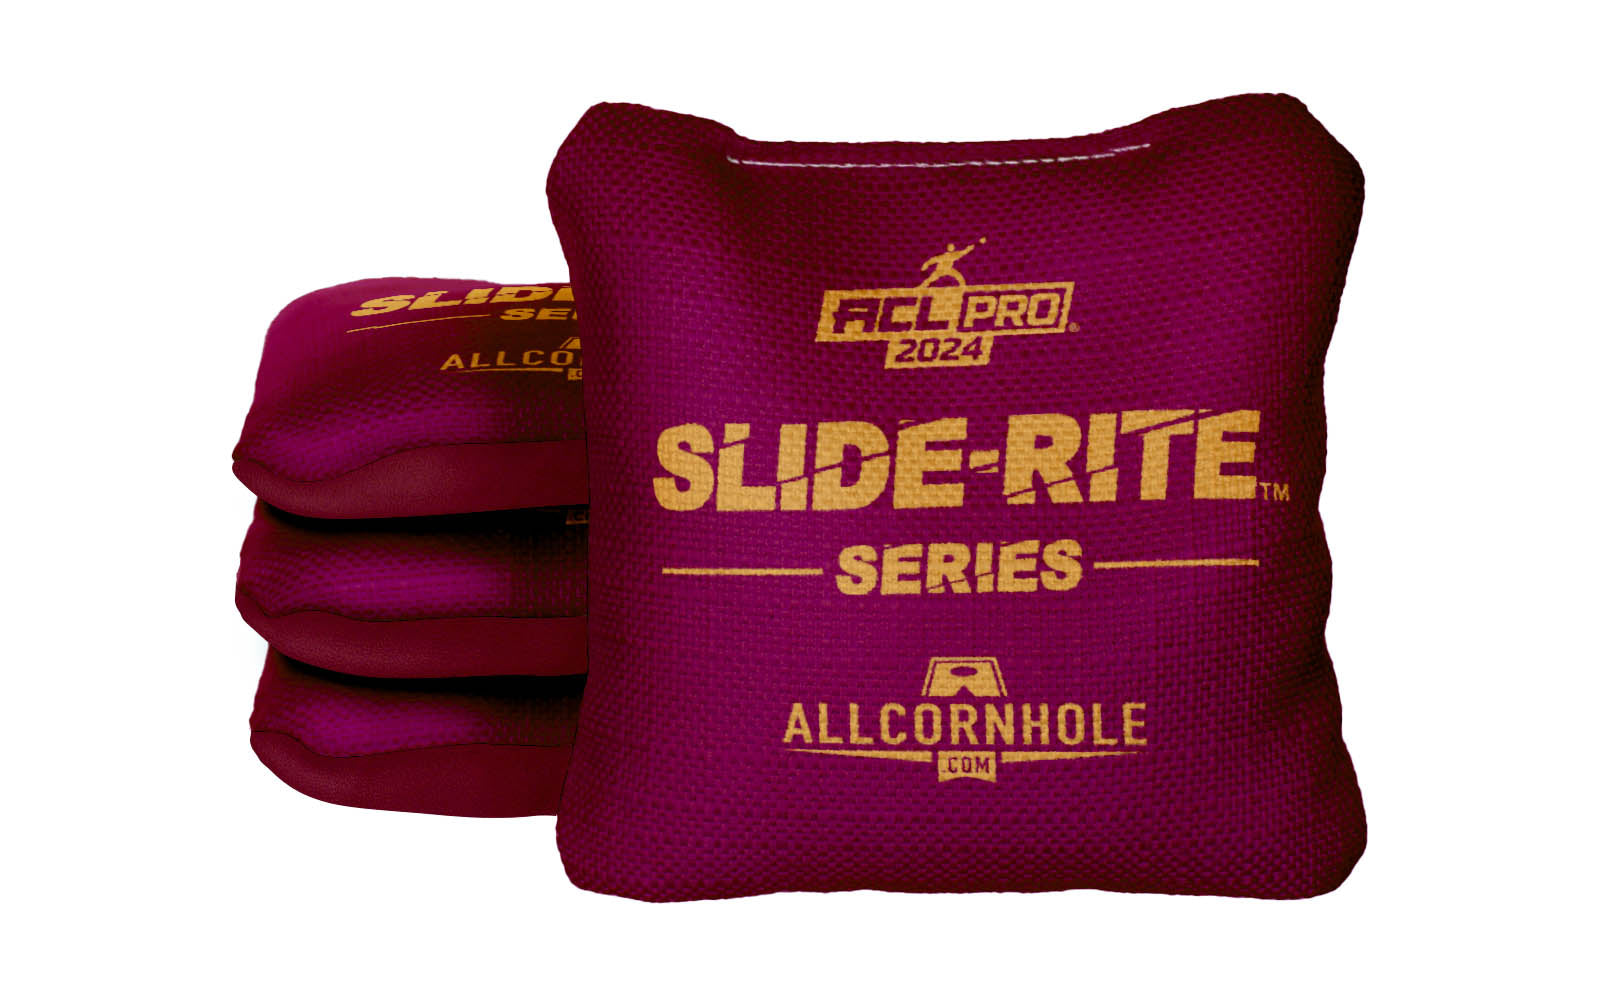 Officially Licensed Collegiate Cornhole Bags - AllCornhole Slide Rite - Set of 4 - Virginia Tech